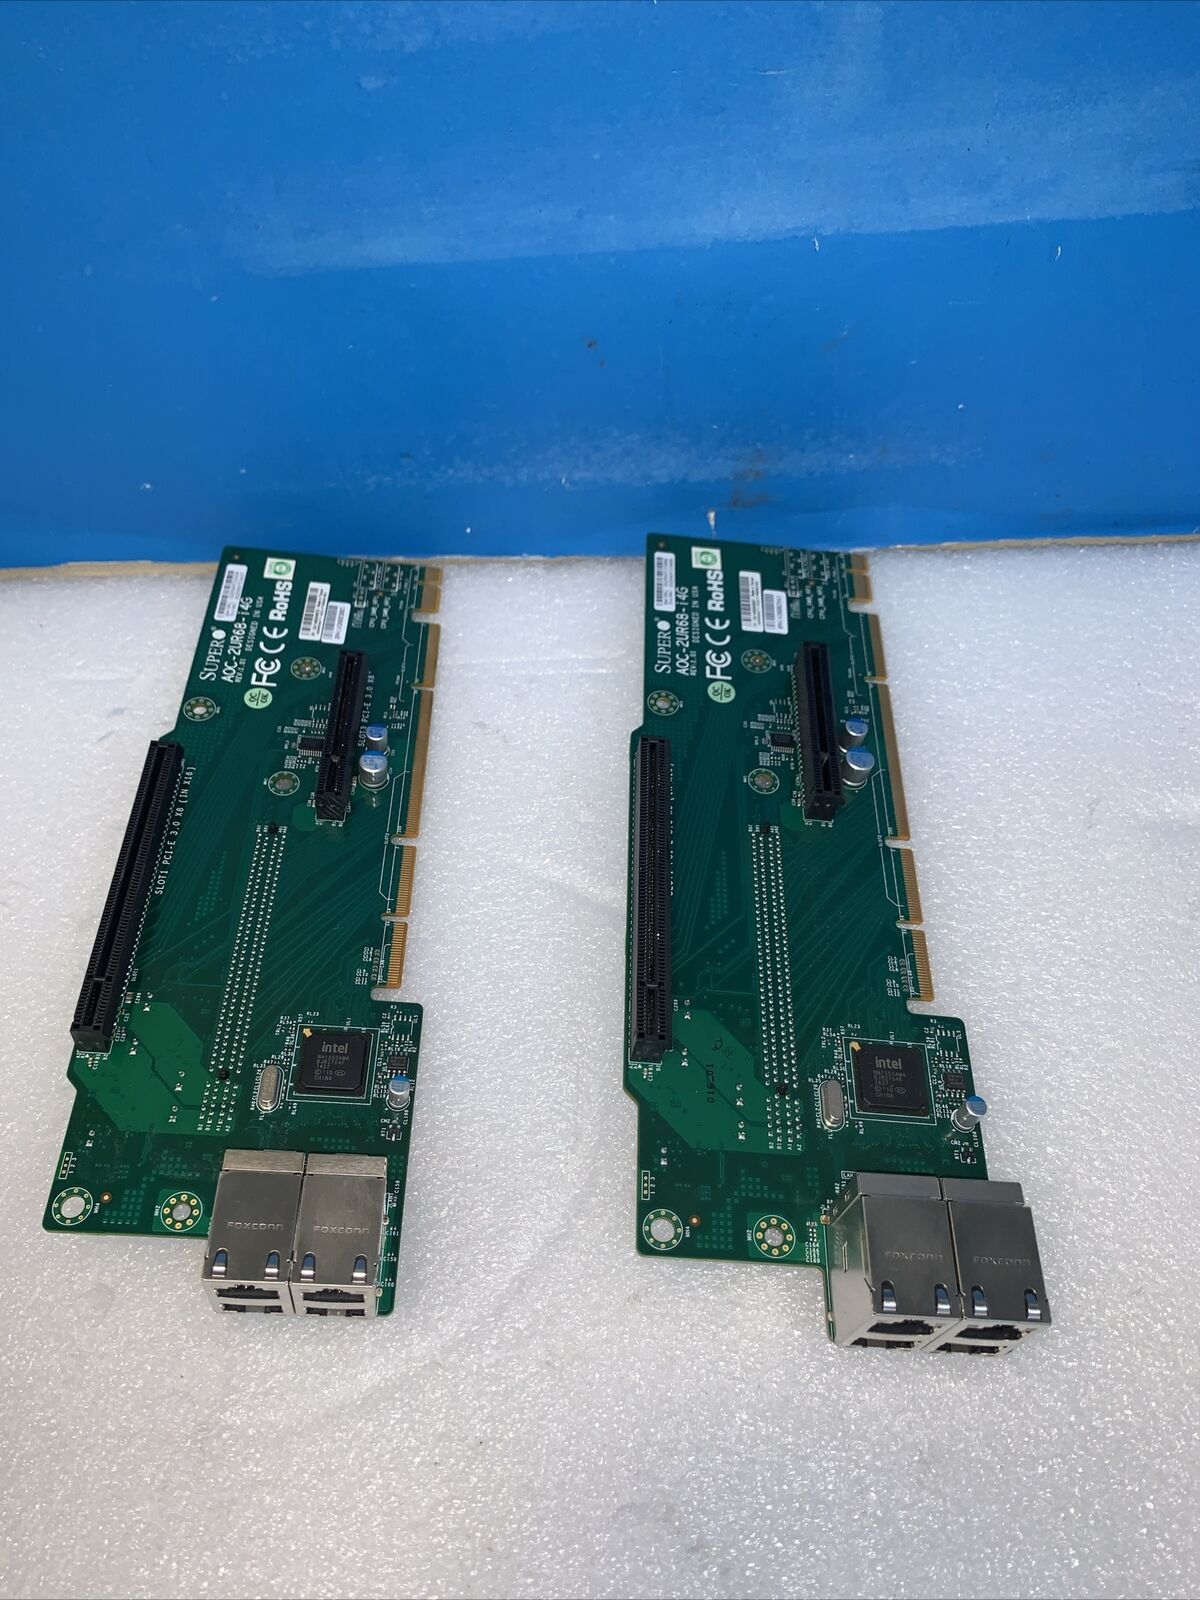 (1x) Supermicro AOC-2UR68-i4G 4-port Intel i350 2U Gigabit Ethernet Card Adapter